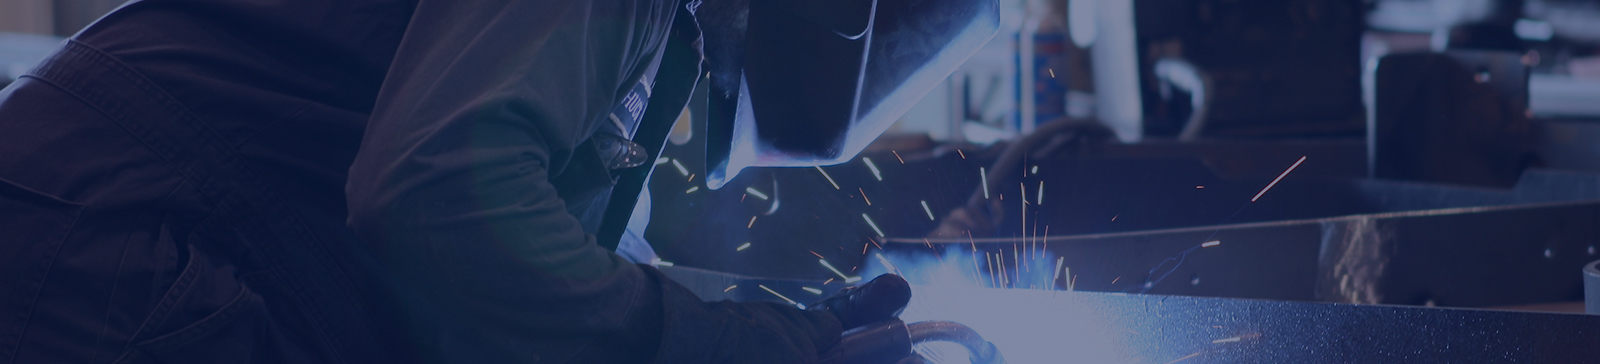 Image of metal worker in Durham Region